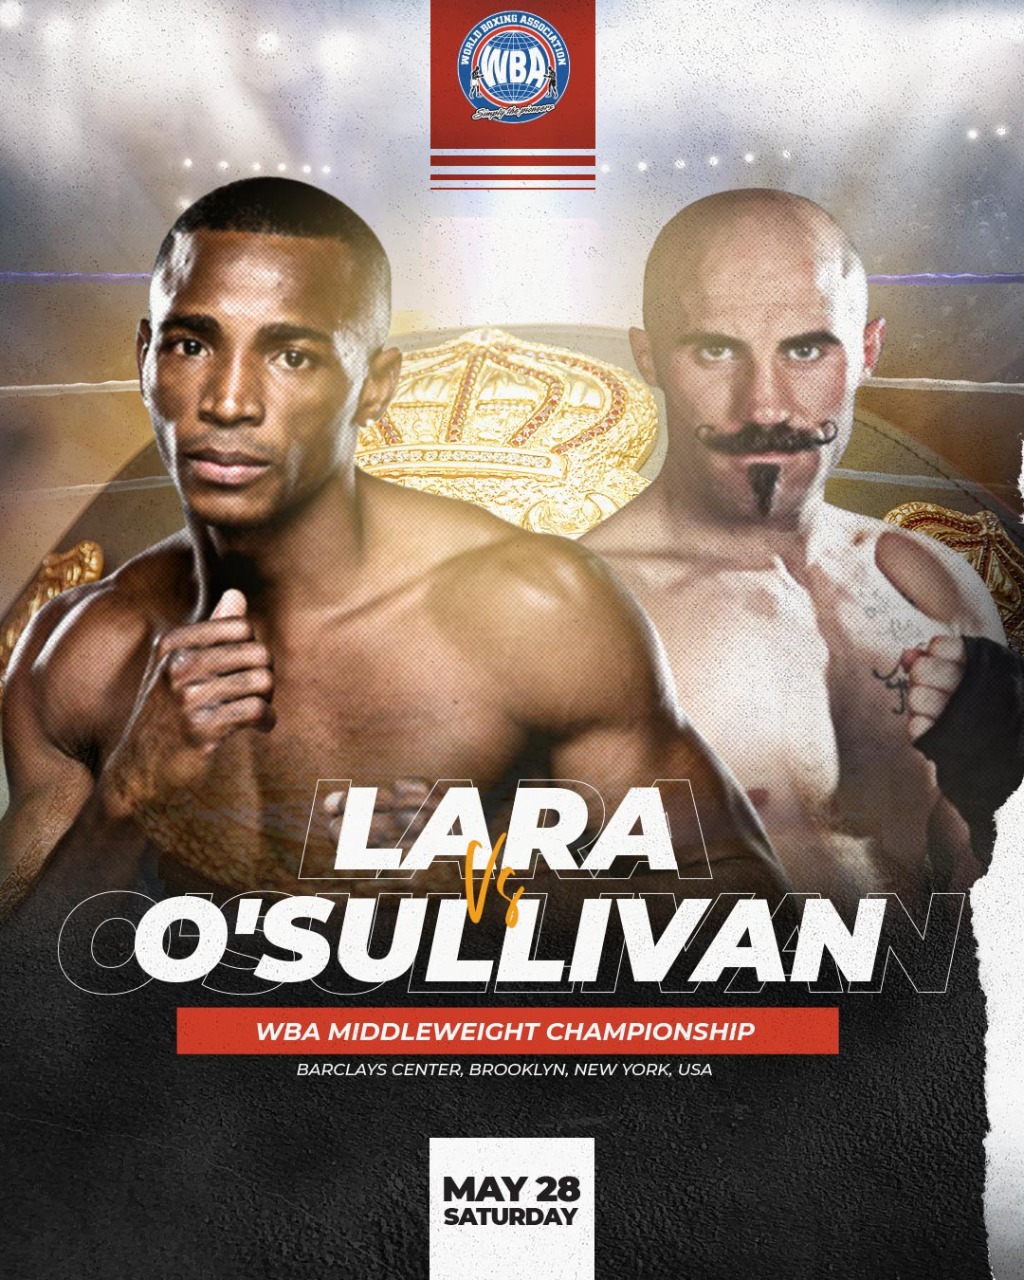 Lara defends his WBA belt against O’Sullivan